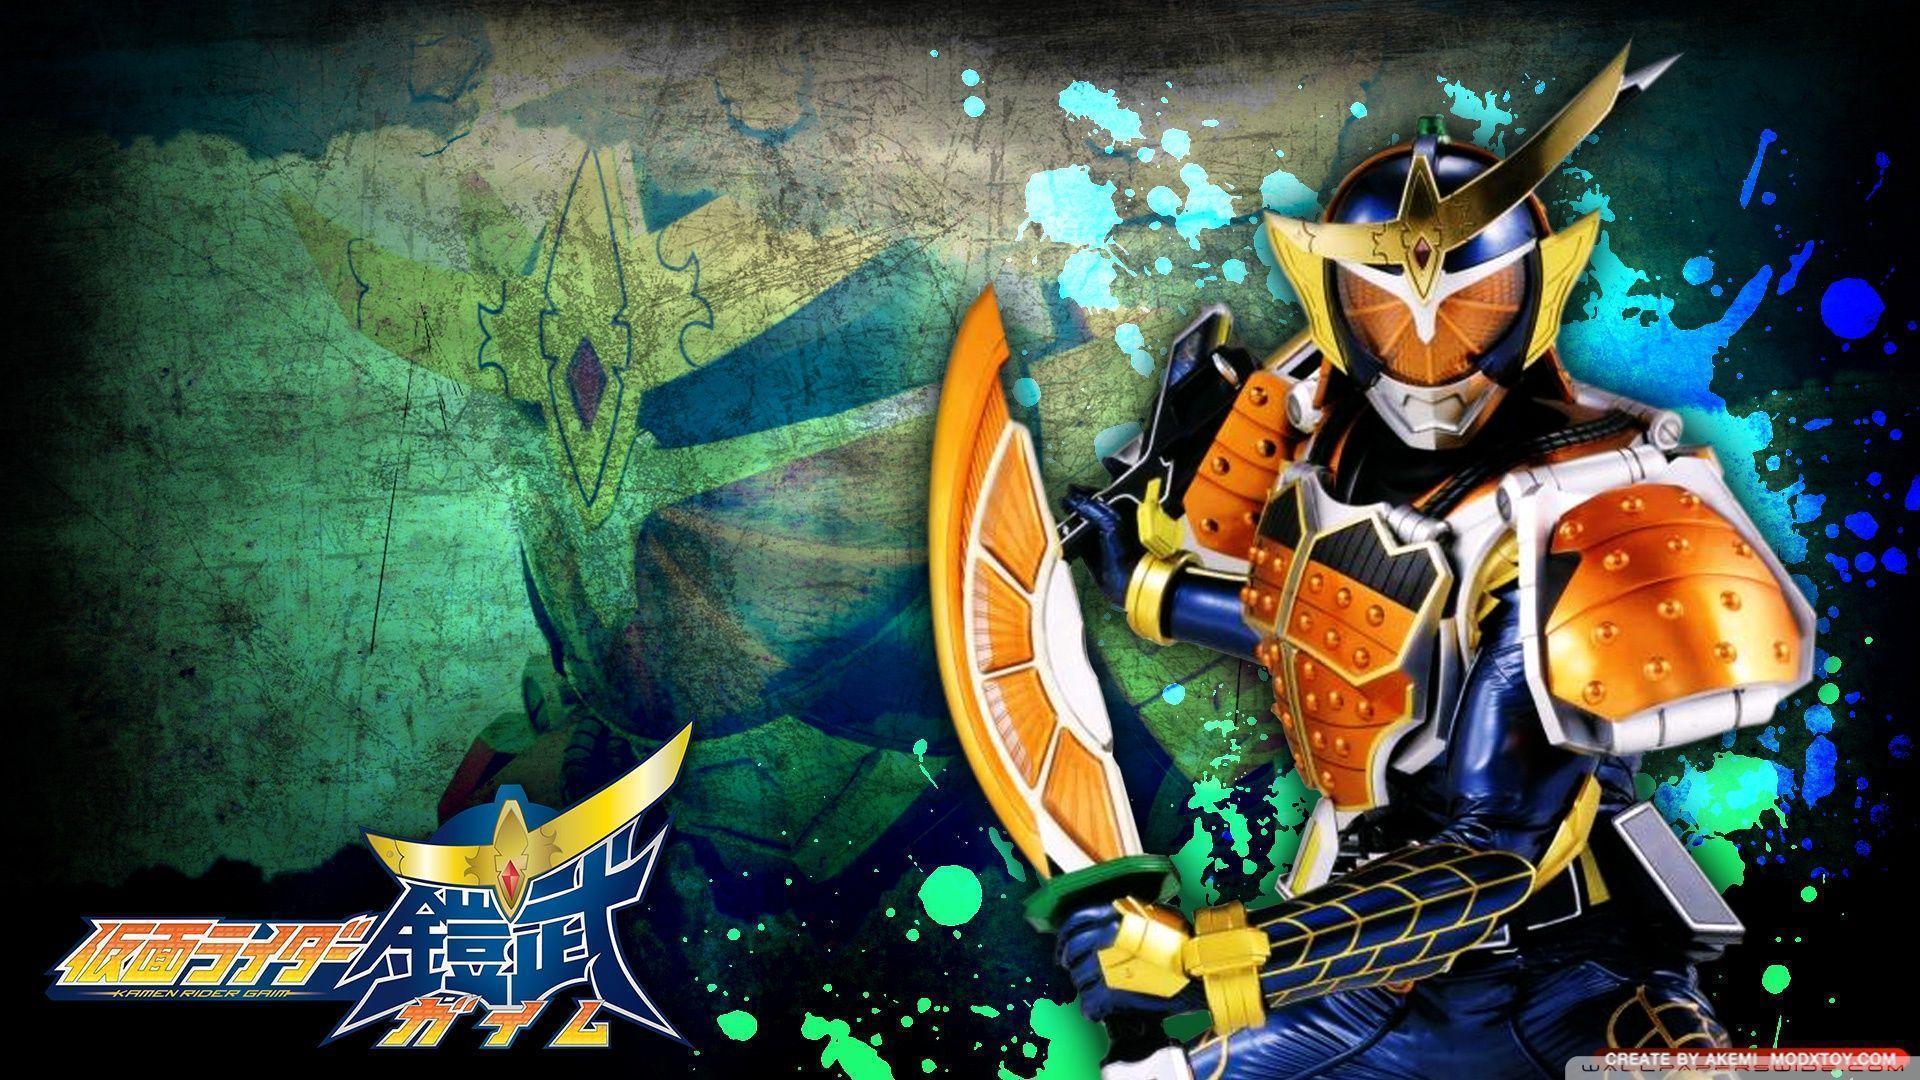 Kamen Rider Saber Primitive Dragon wallpaper by tukangedittoku on DeviantArt